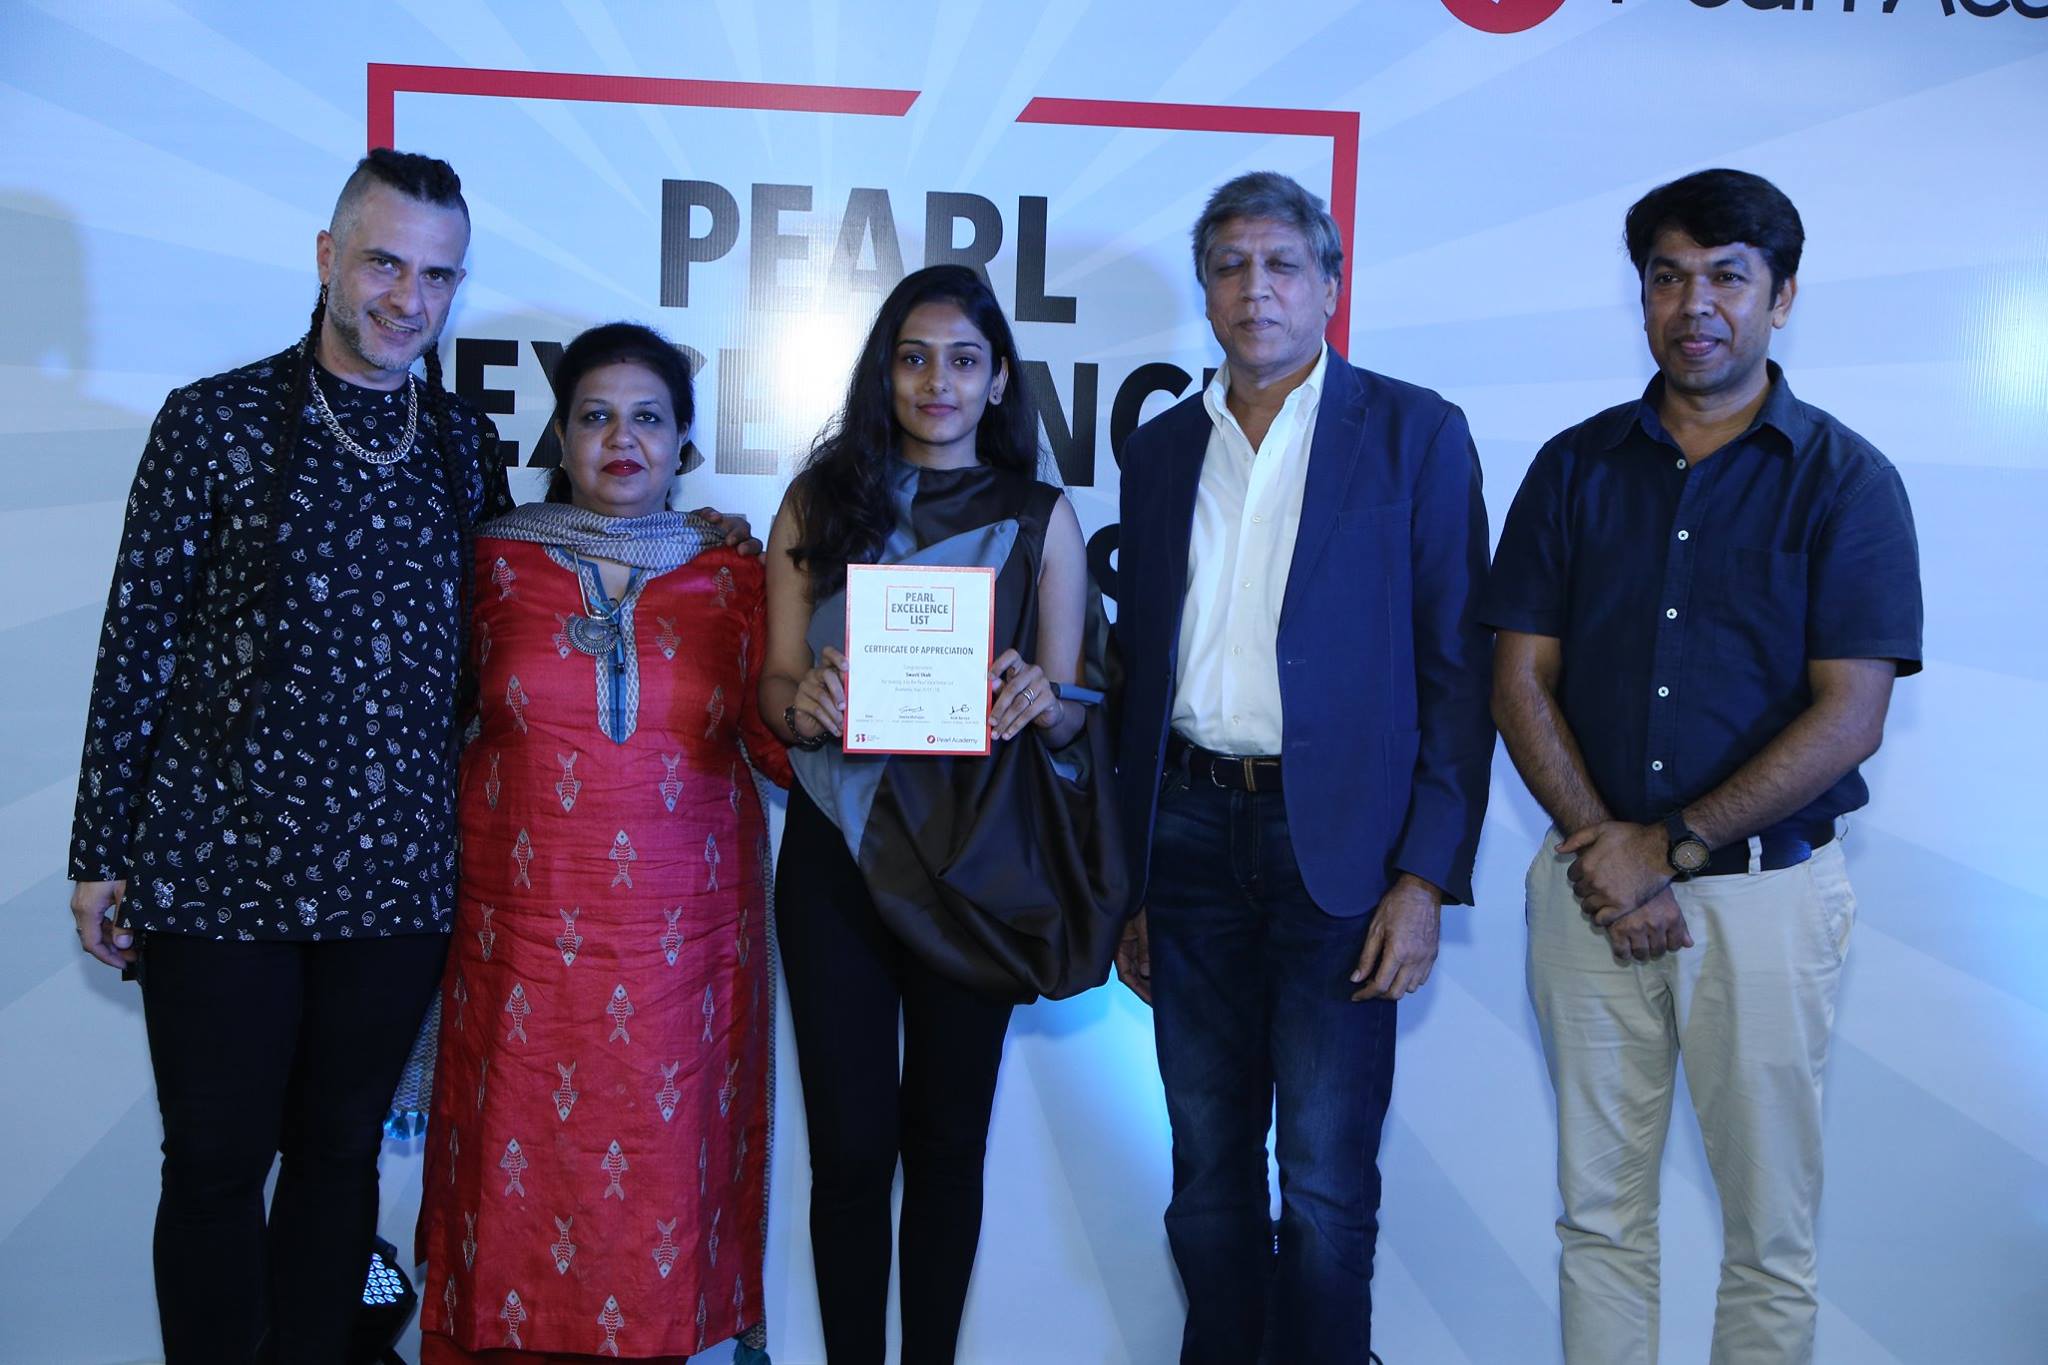 Pearl Excellence Awards Delhi Campus 2018 - Part 2